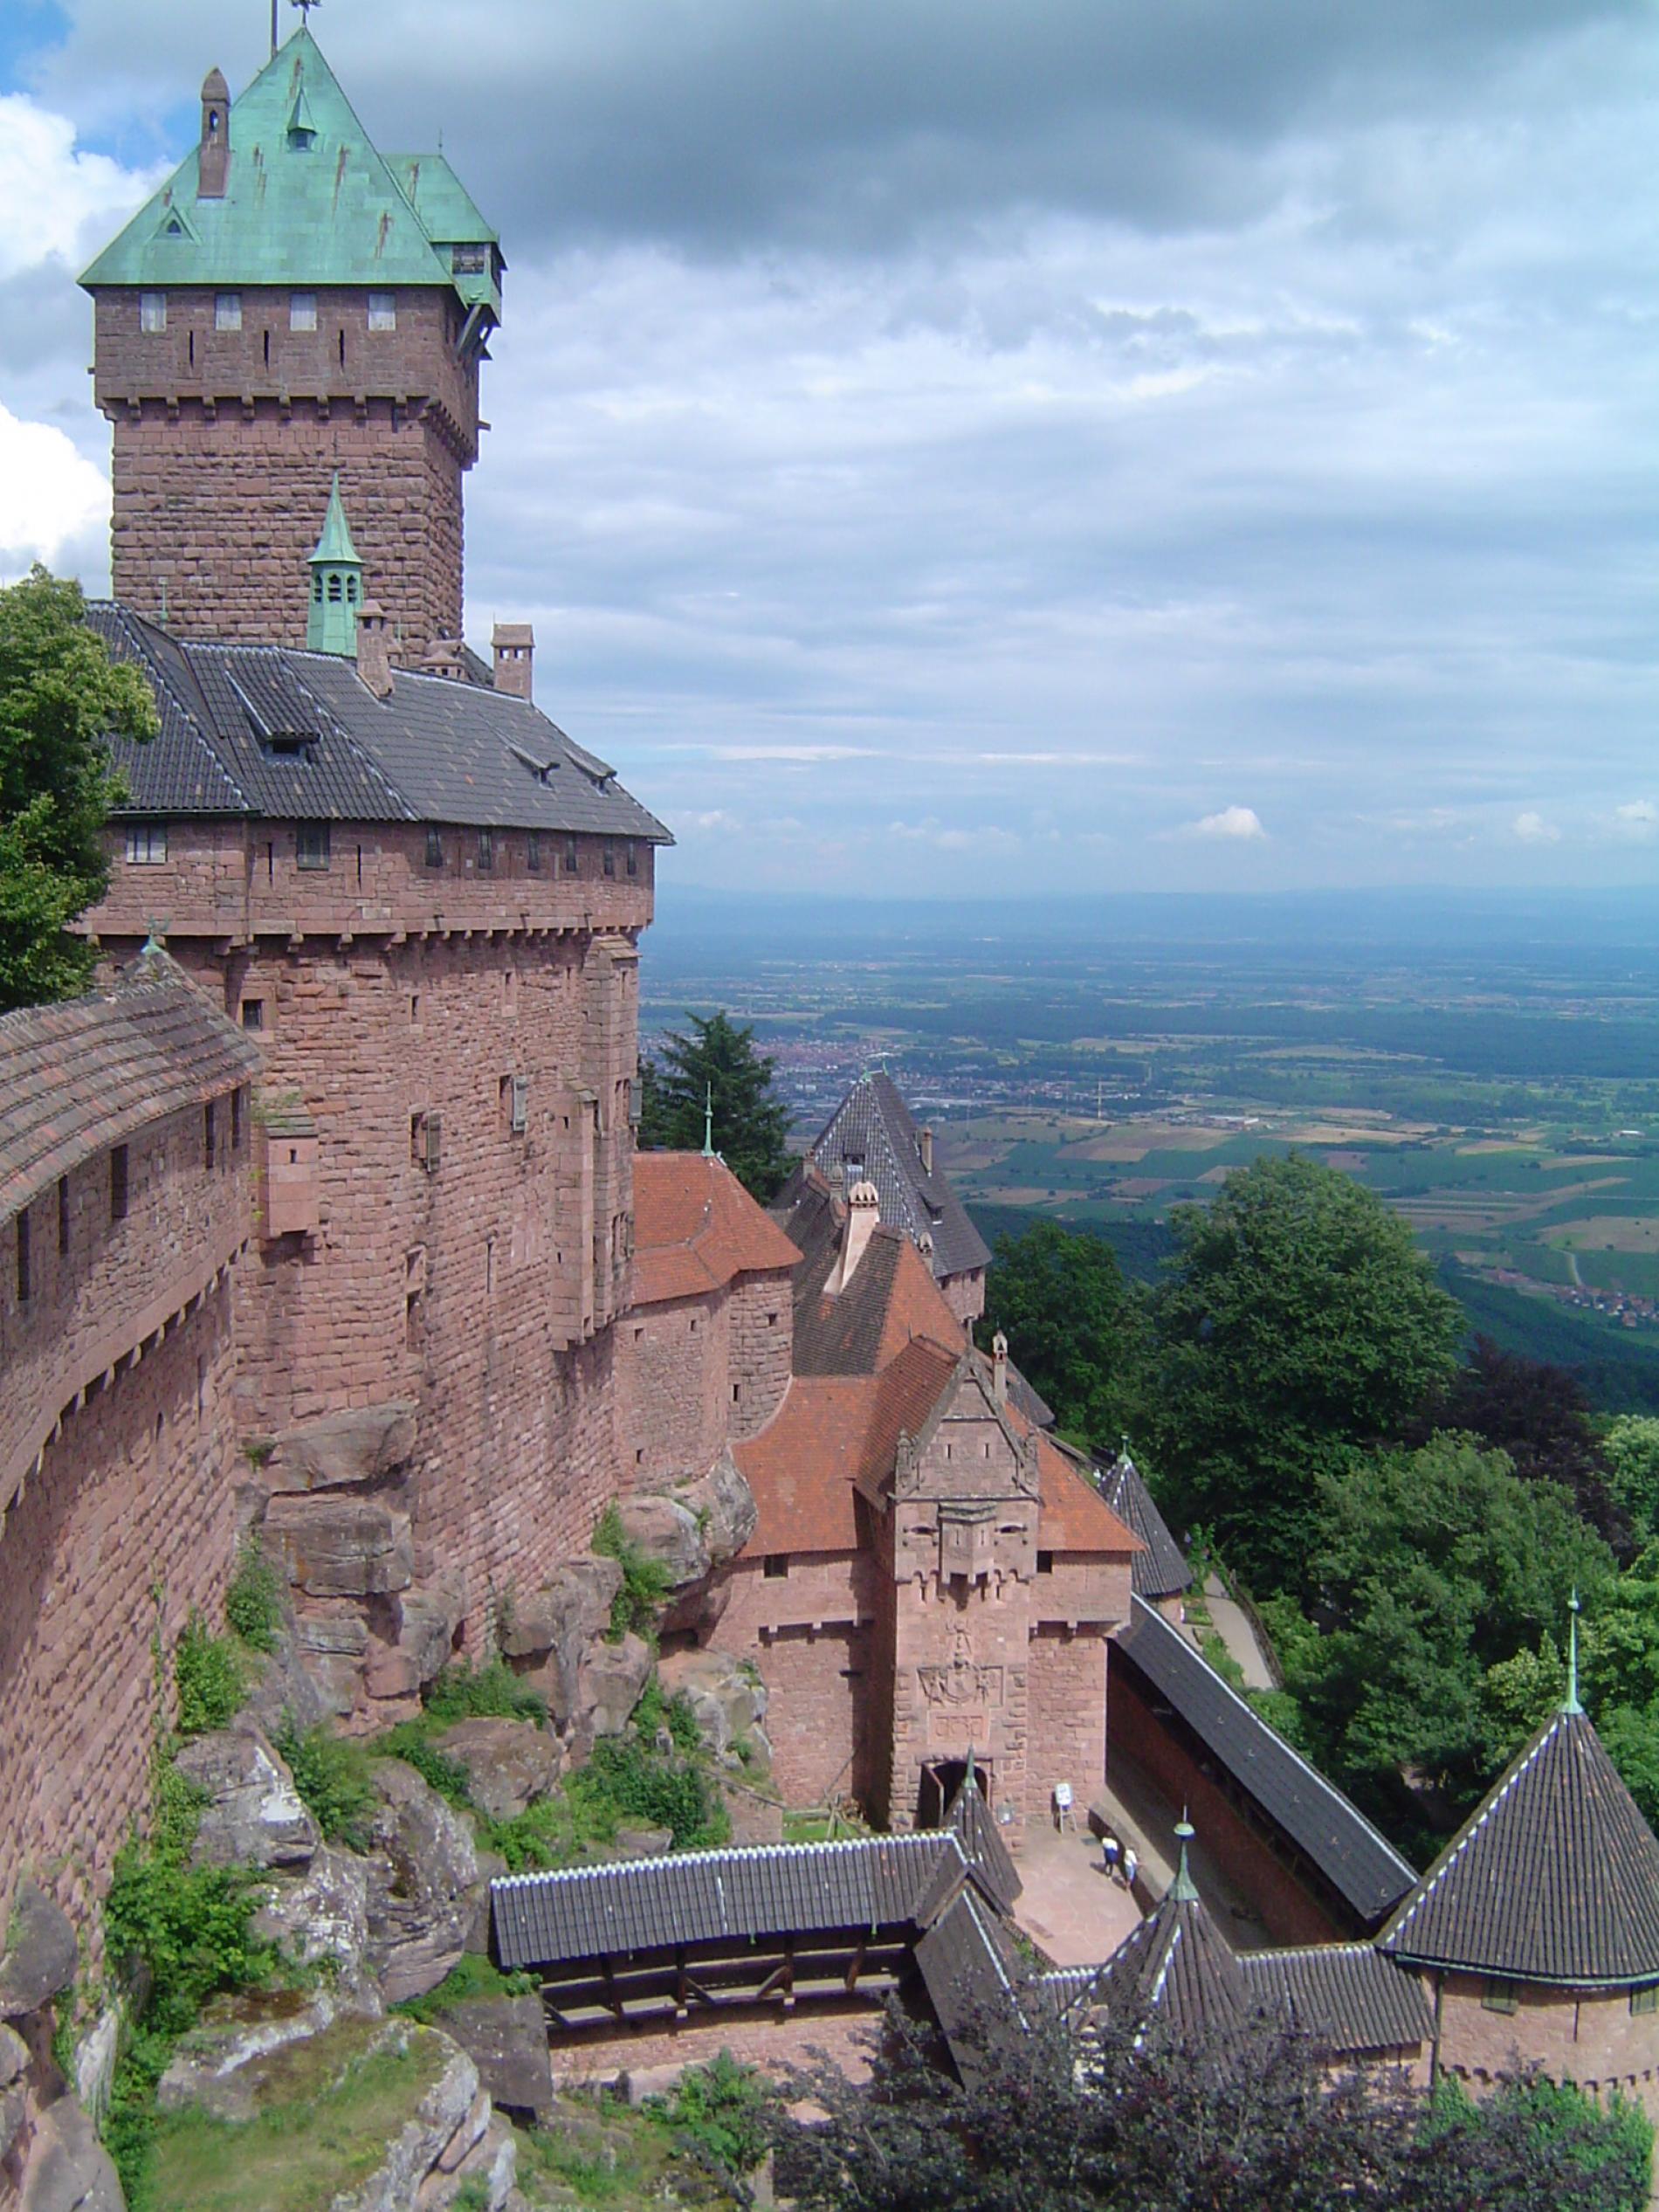  The Haut Koenigsbourg Castle